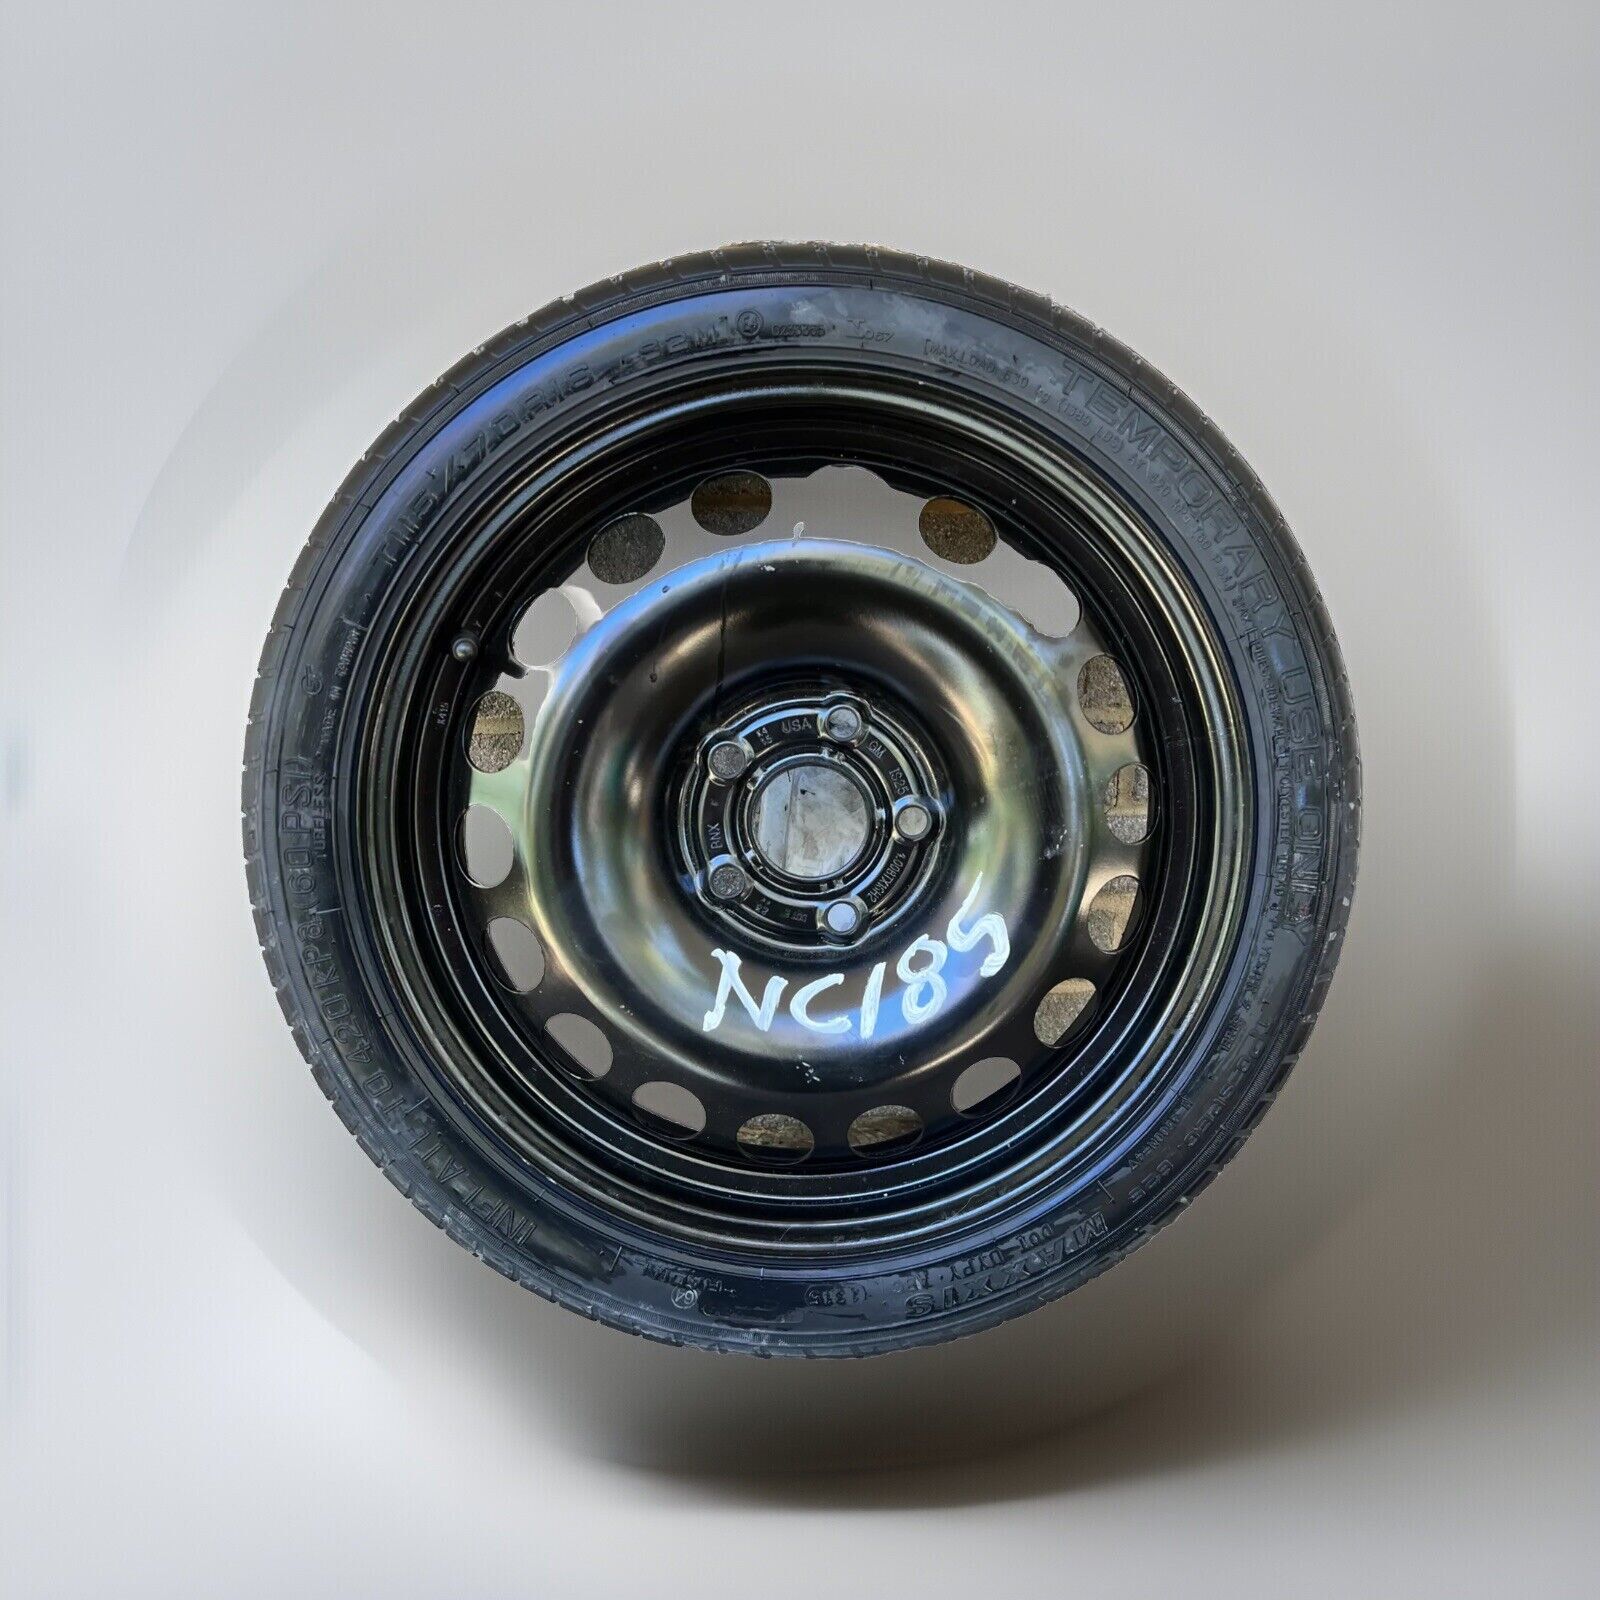 🏆2011-2019 Chevy Cruze 12-17 Verano Compact Spare Donut Tire 115/70/16 OEM